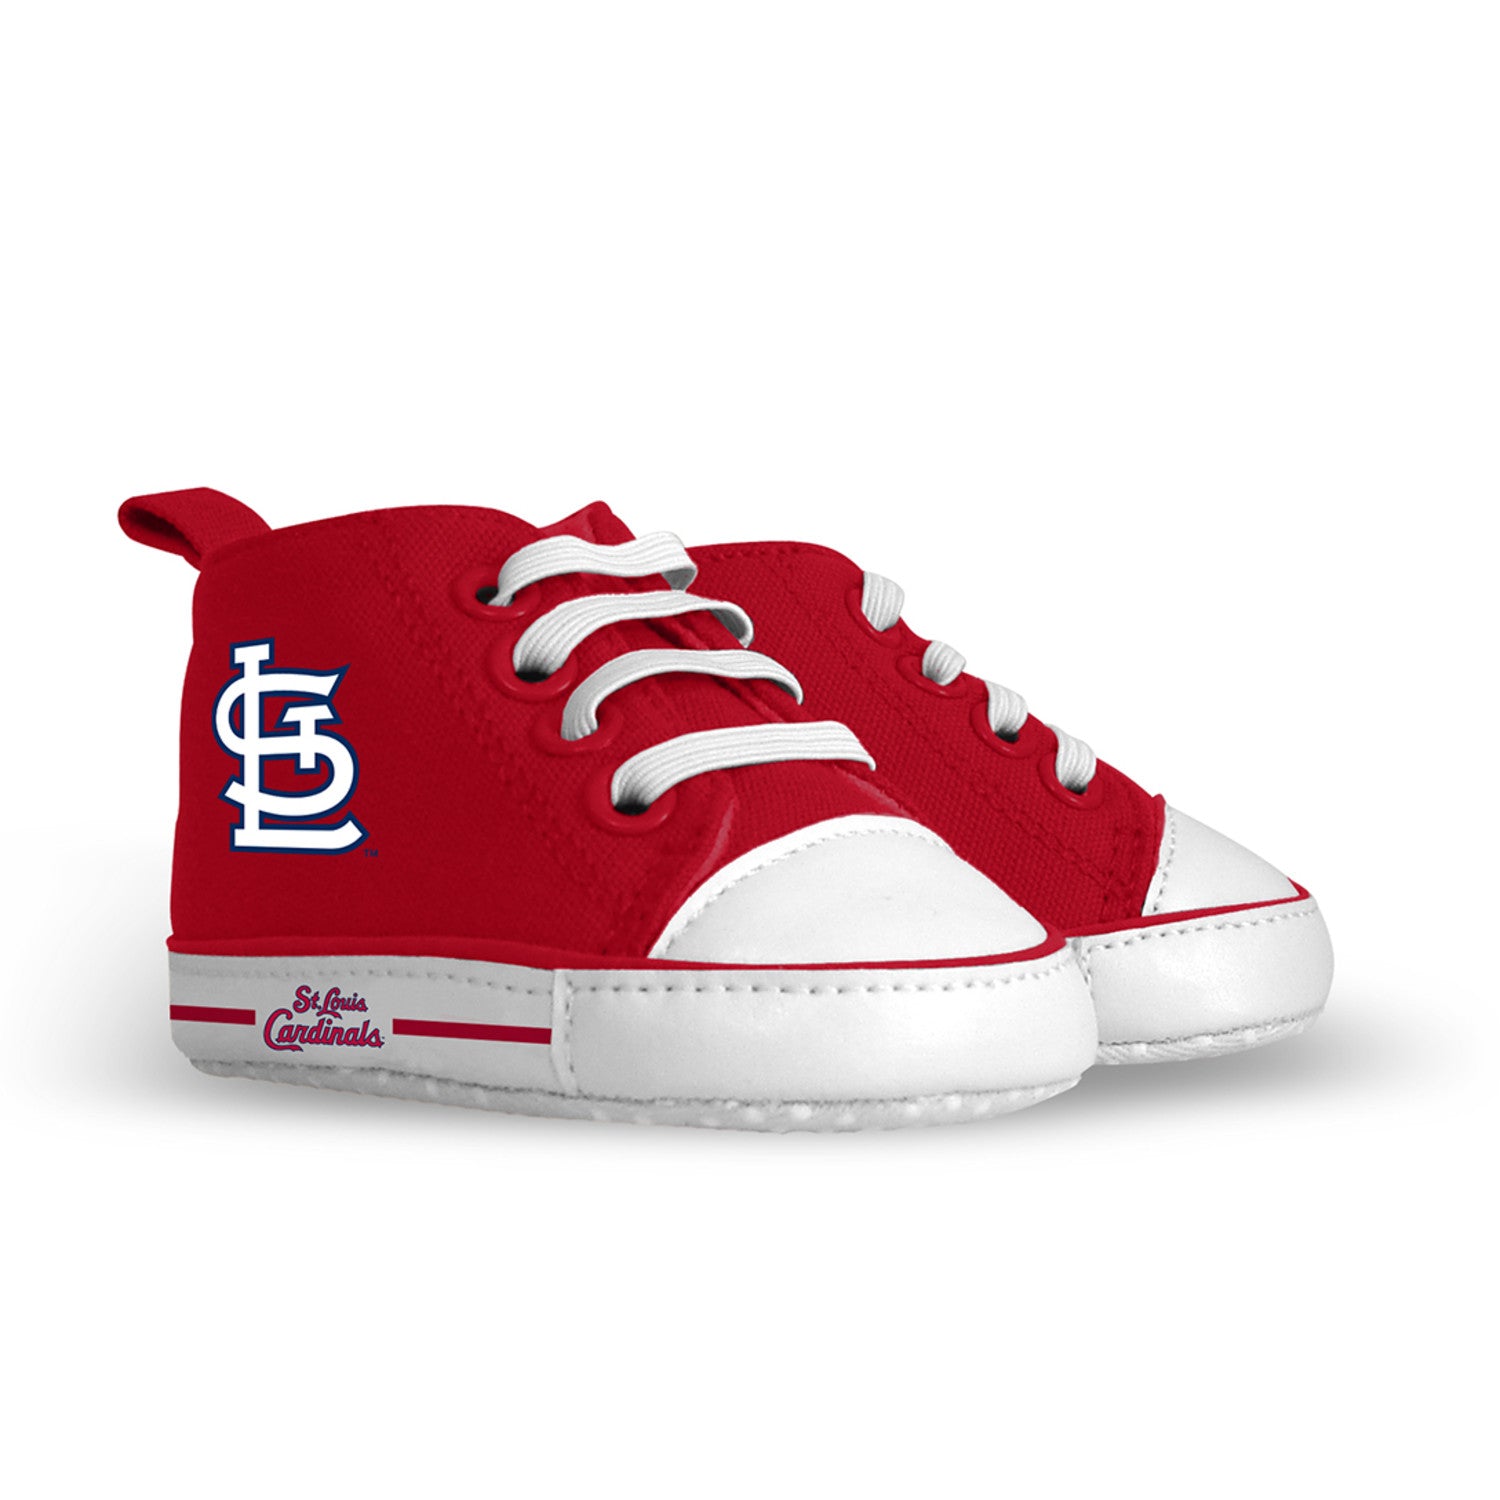 St. Louis Cardinals Baby Shoes